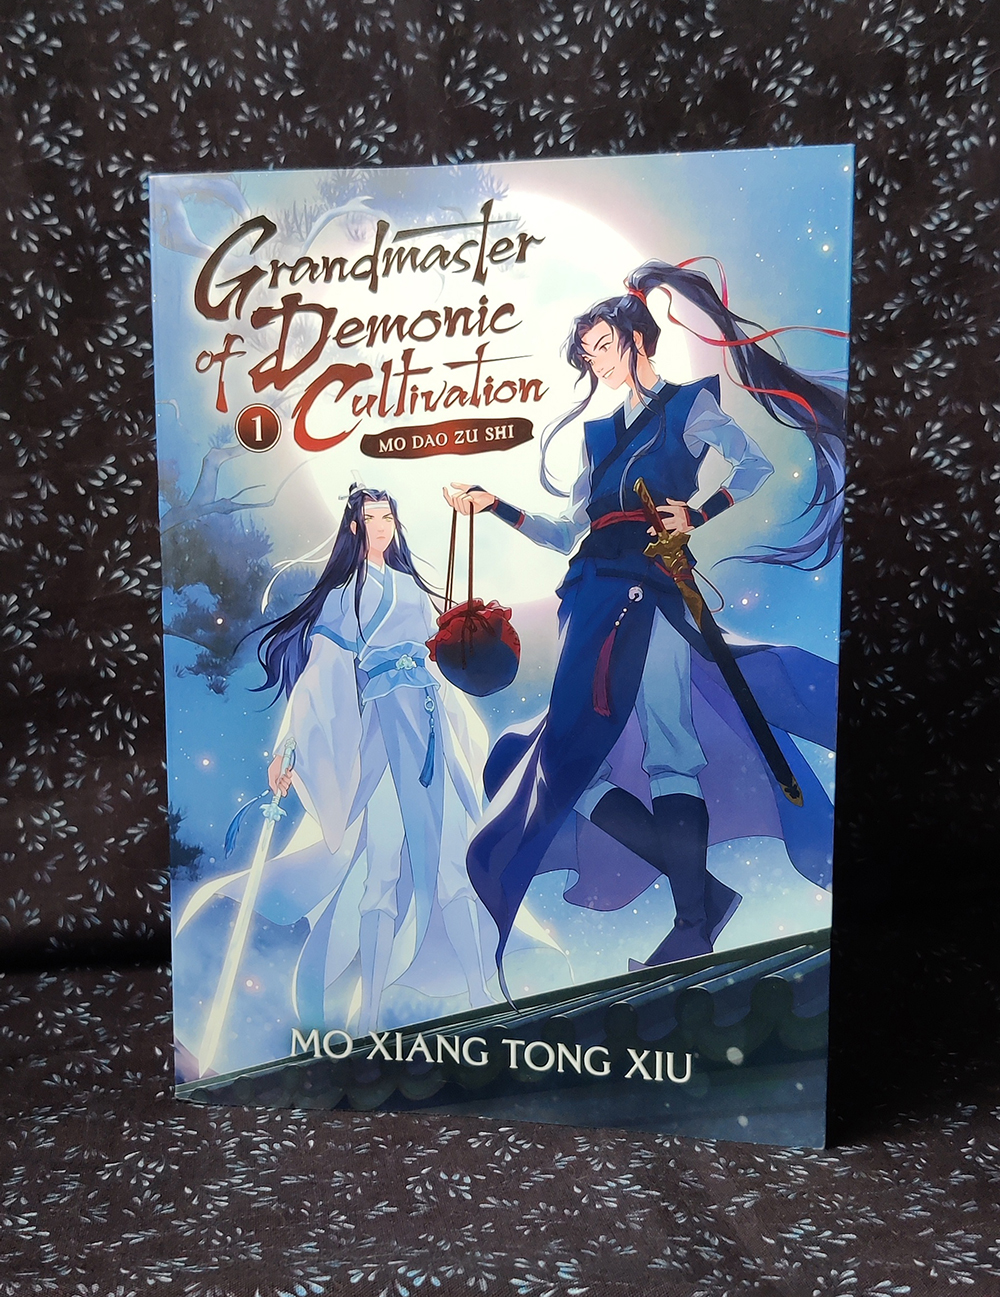 The Grandmaster of Demonic Cultivation - Mo Dao Zu Shi